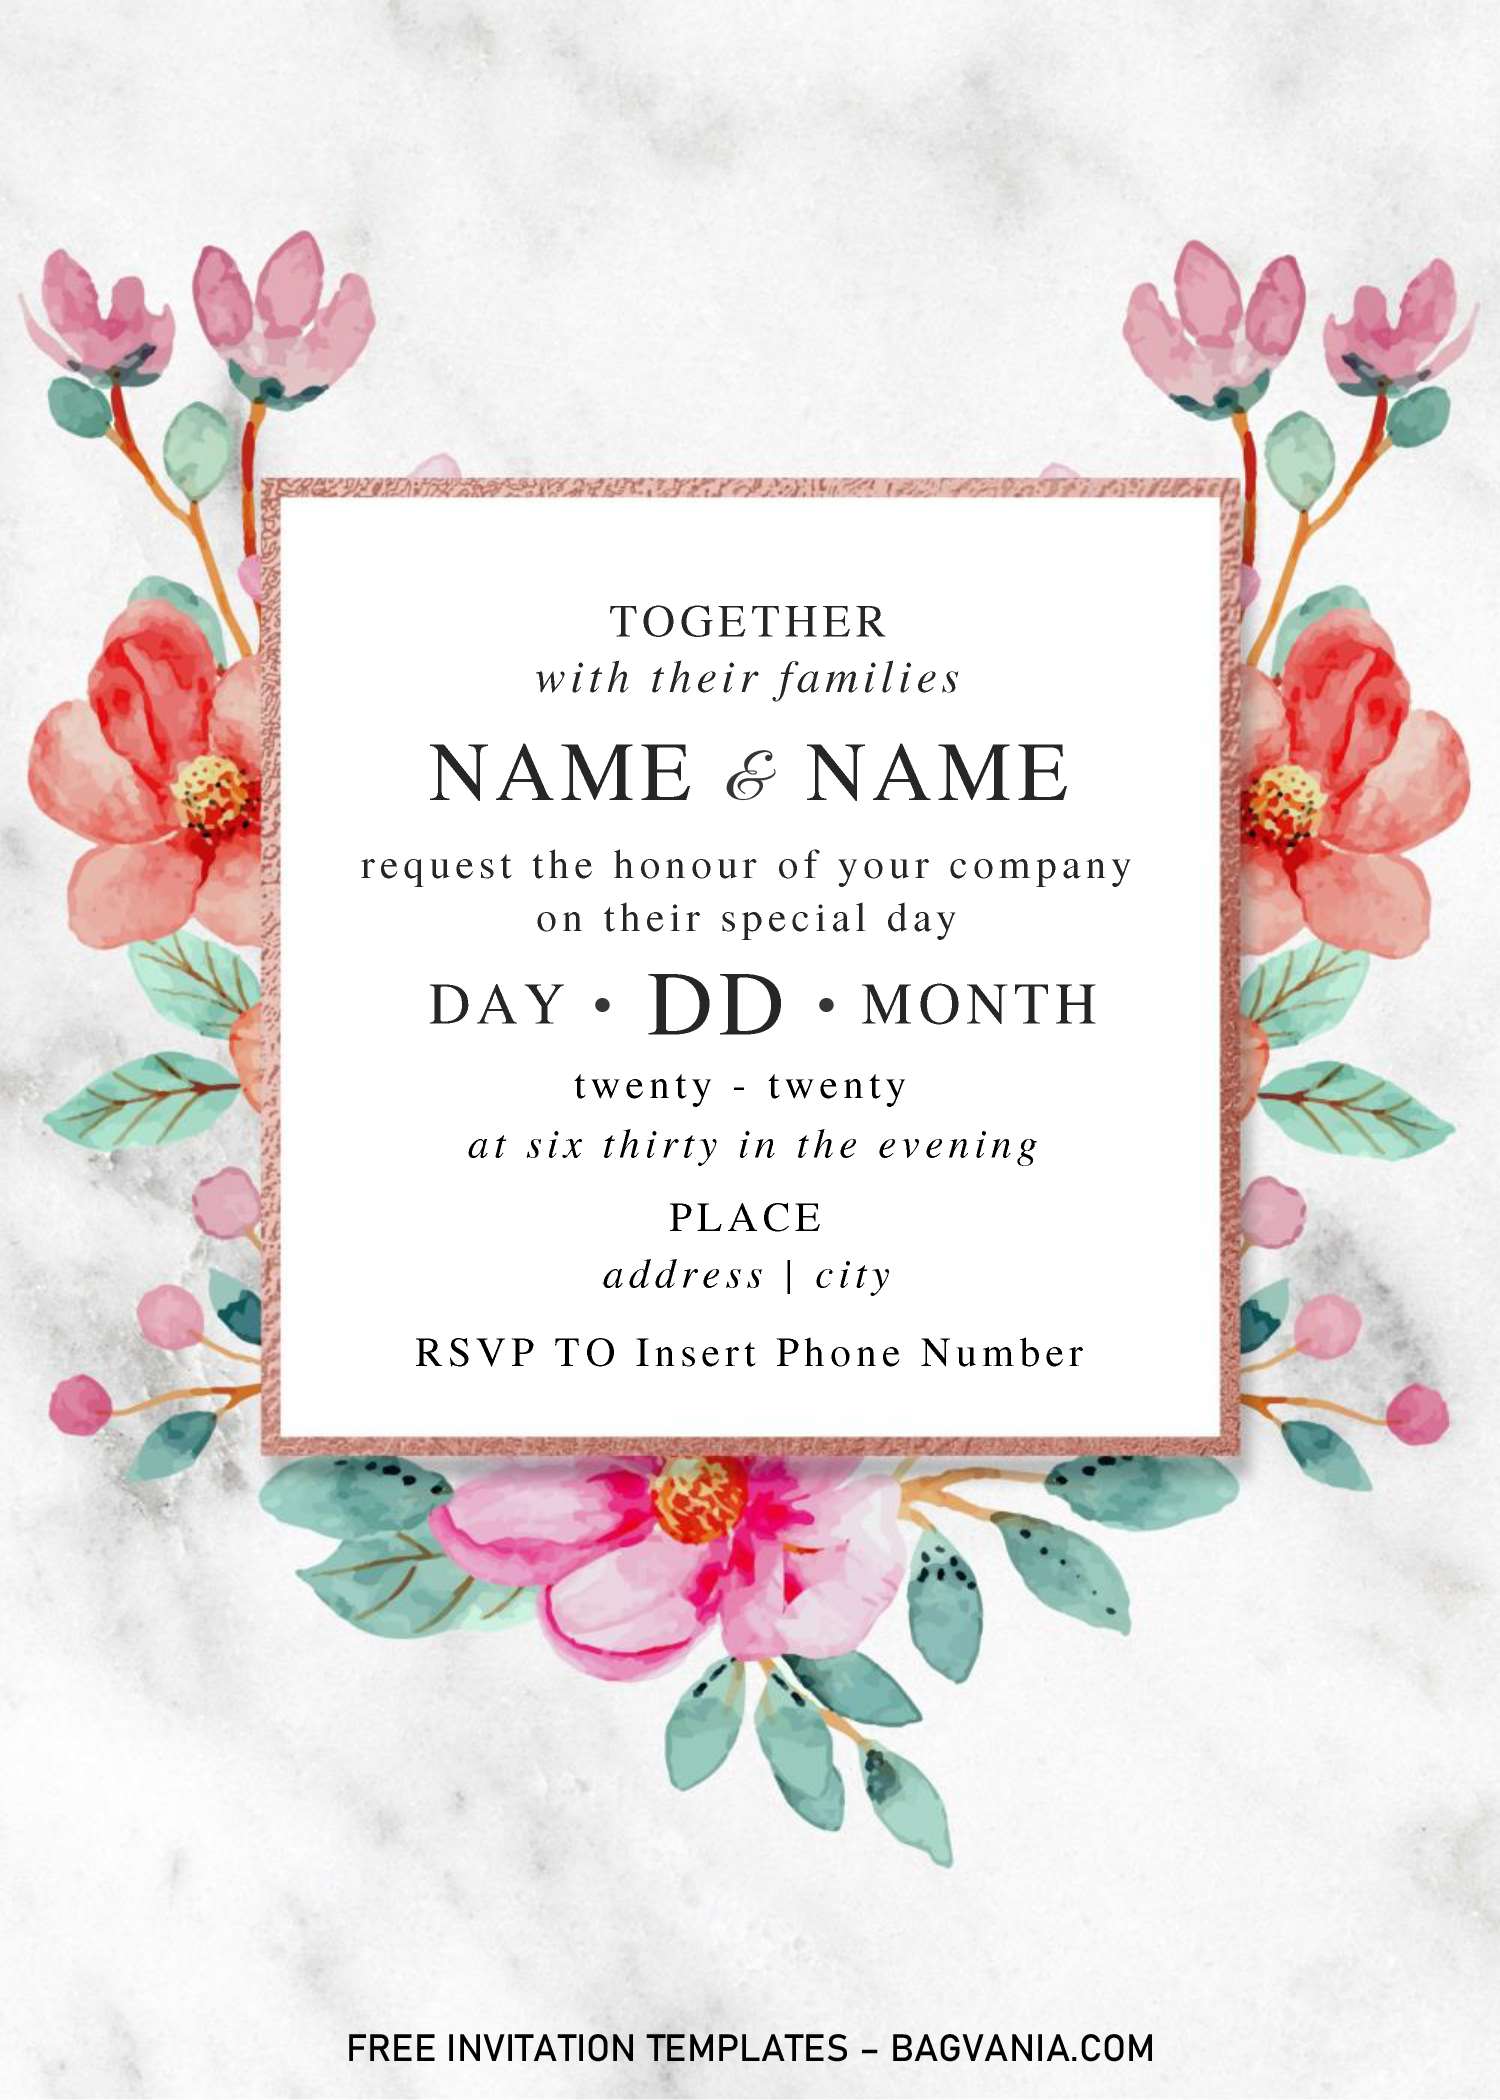 Festive Floral Wedding Invitation Templates